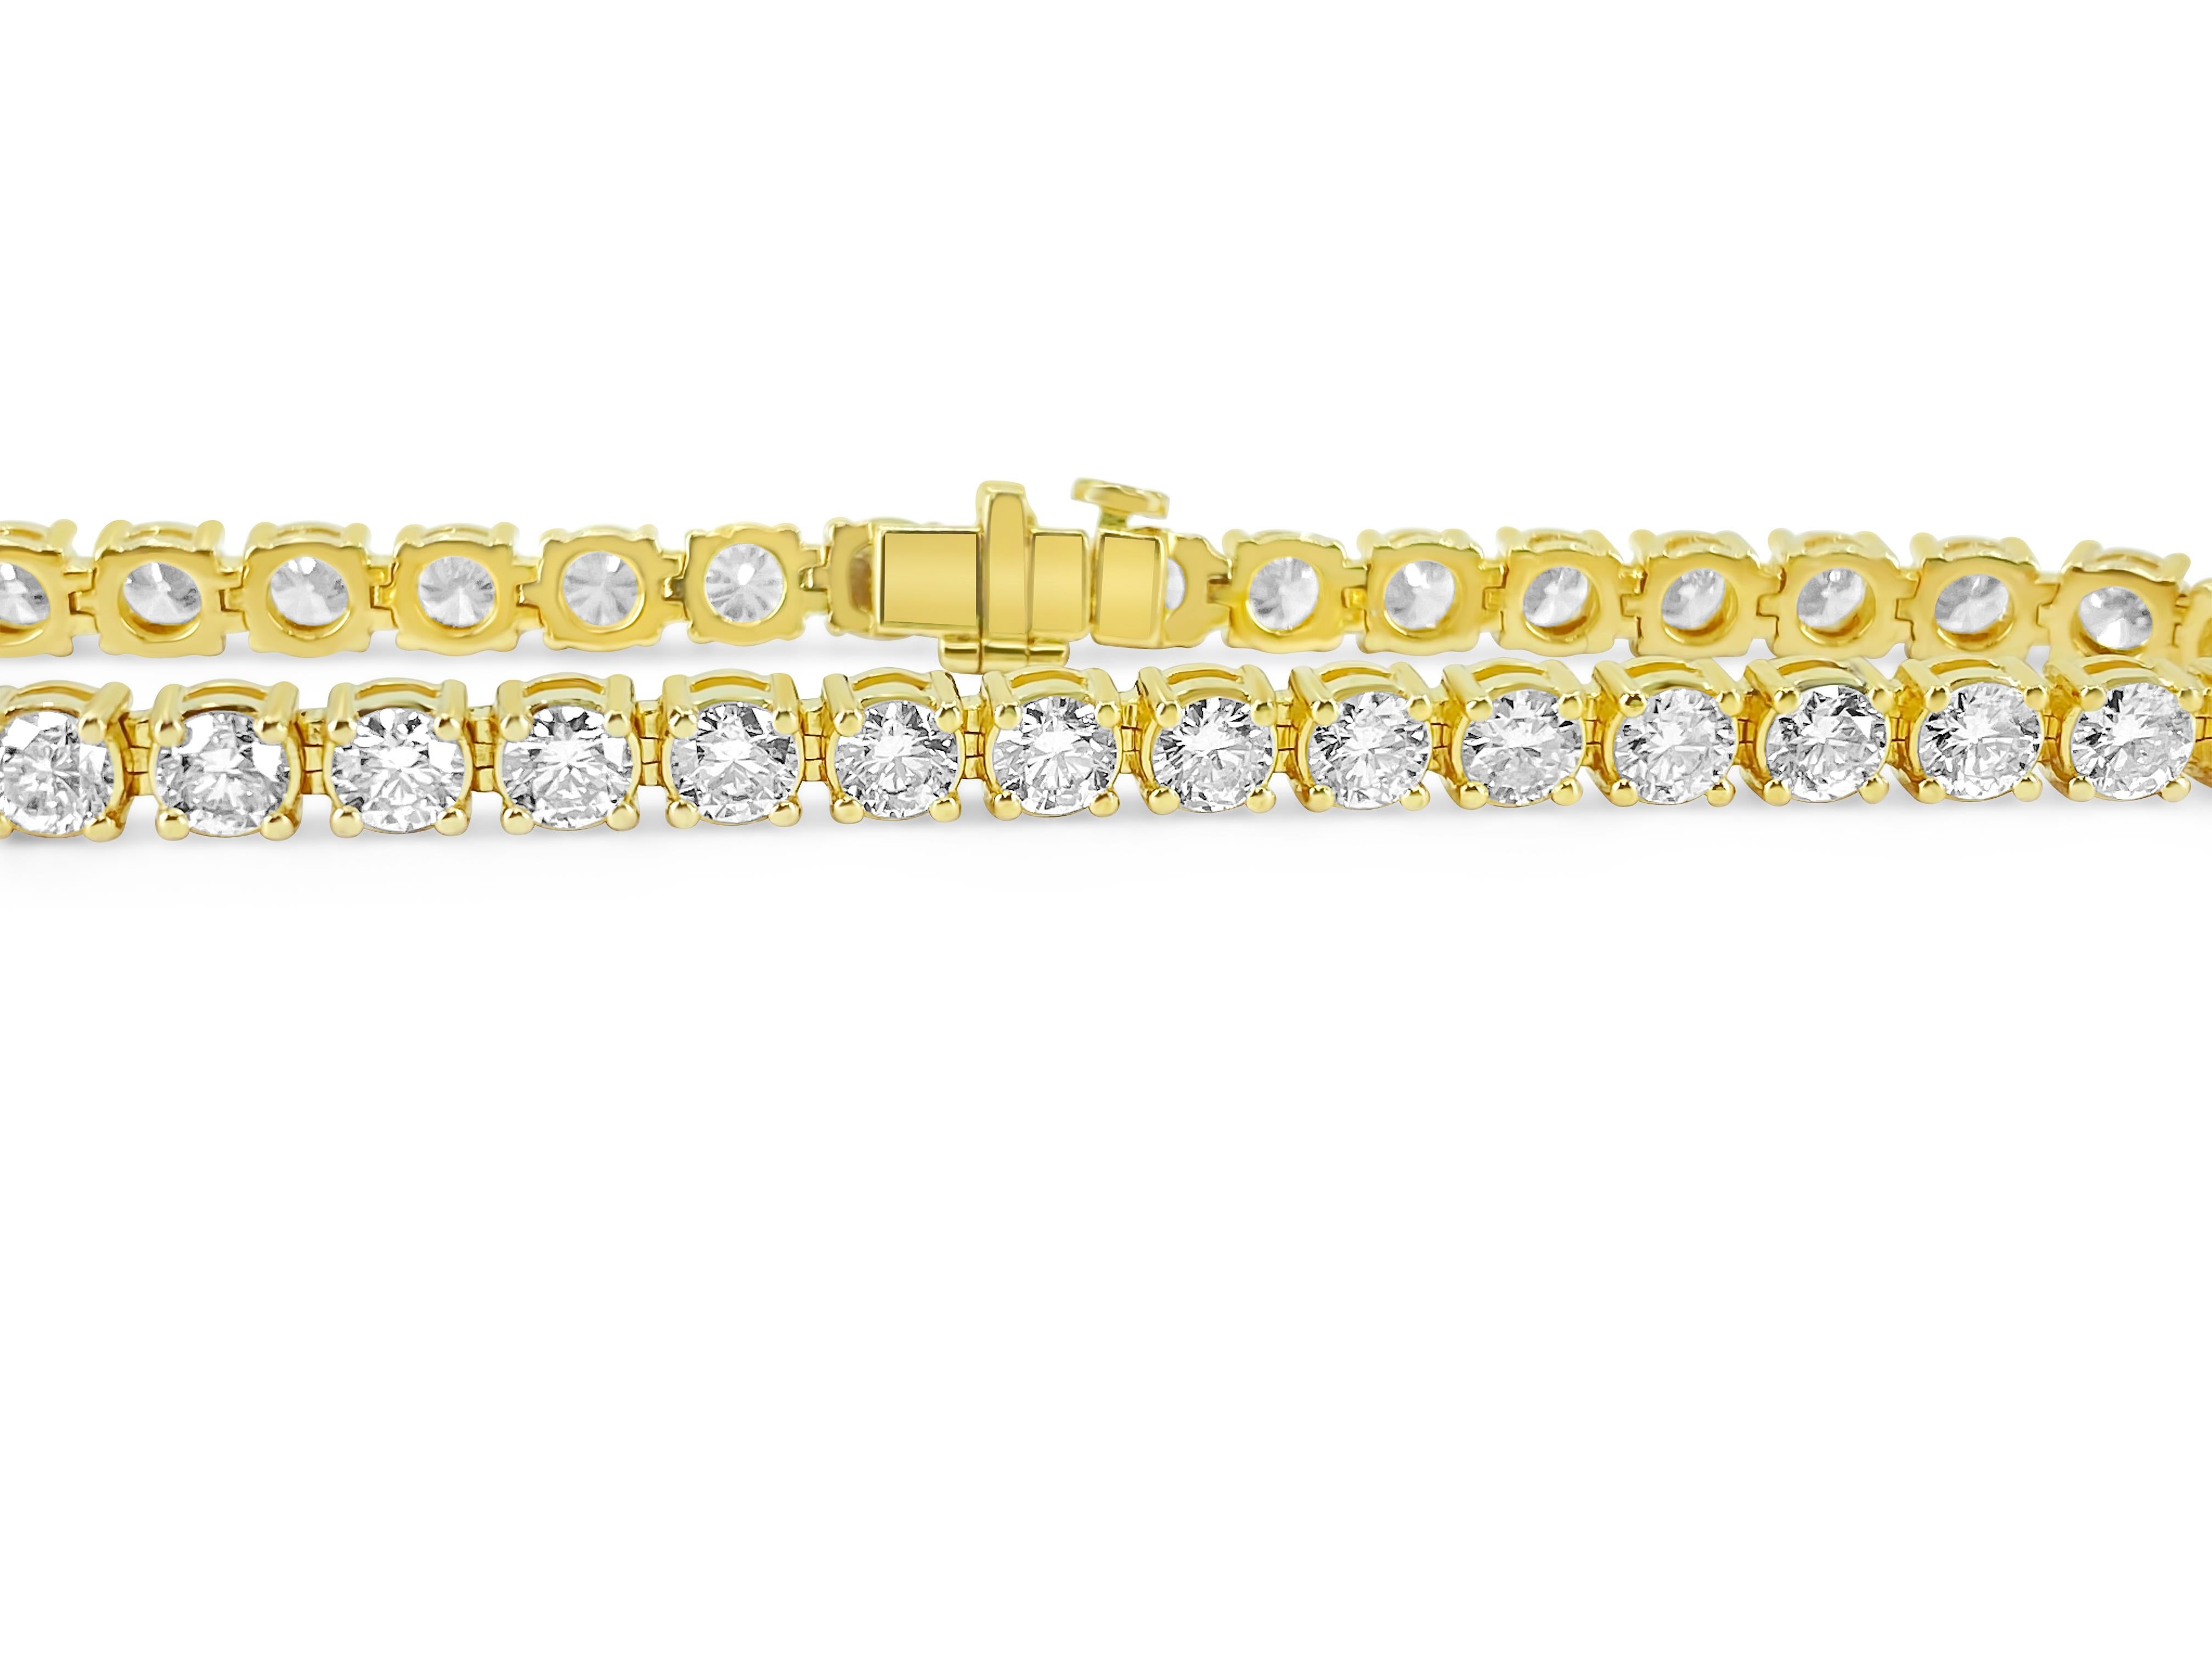 12.33 Carat Diamond Tennis Bracelet in 14k Gold In Excellent Condition For Sale In Miami, FL